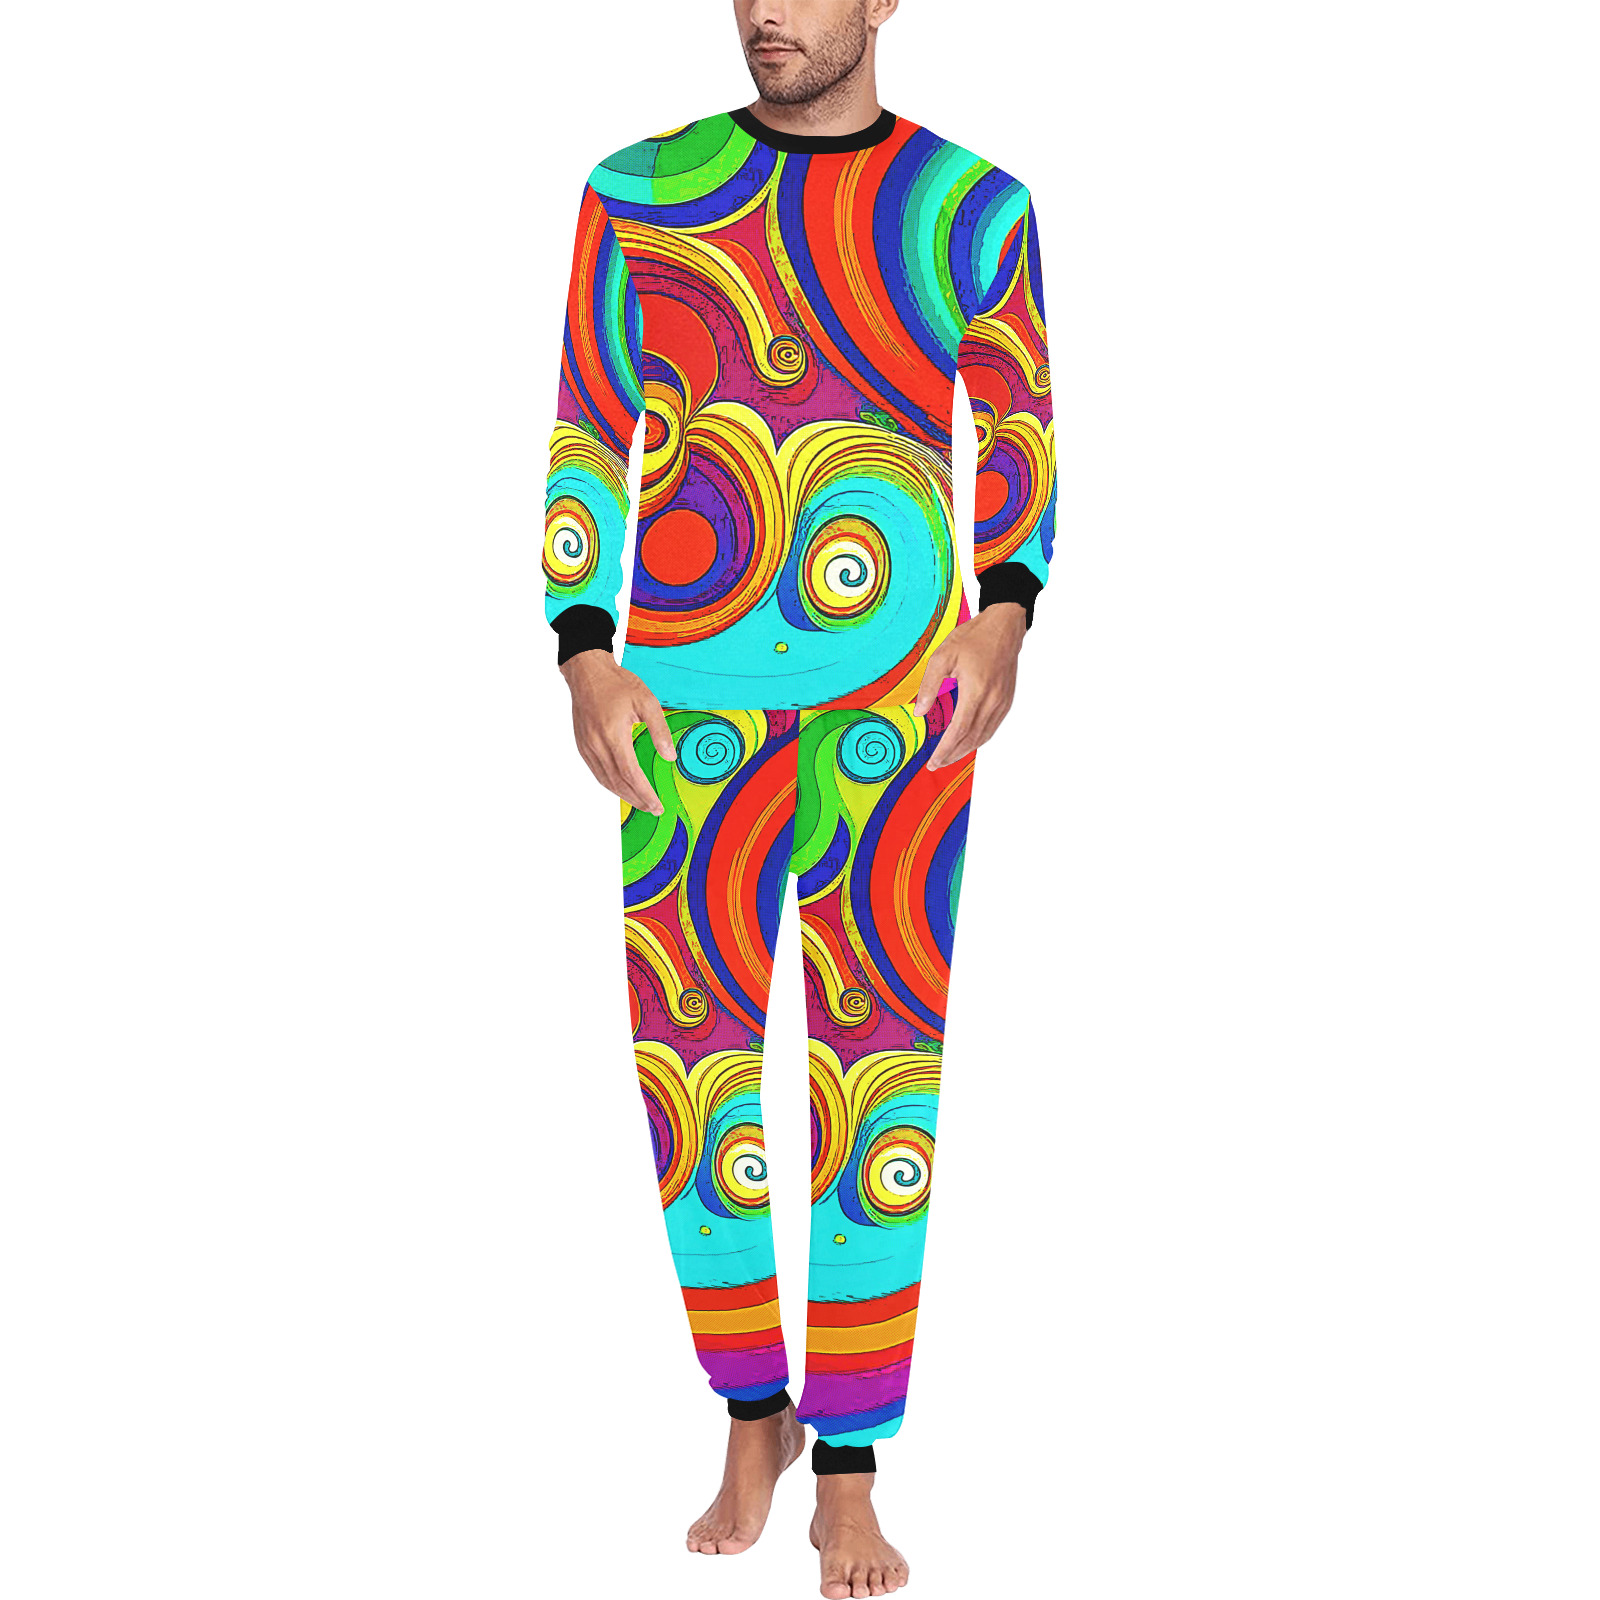 Colorful Groovy Rainbow Swirls Men's All Over Print Pajama Set